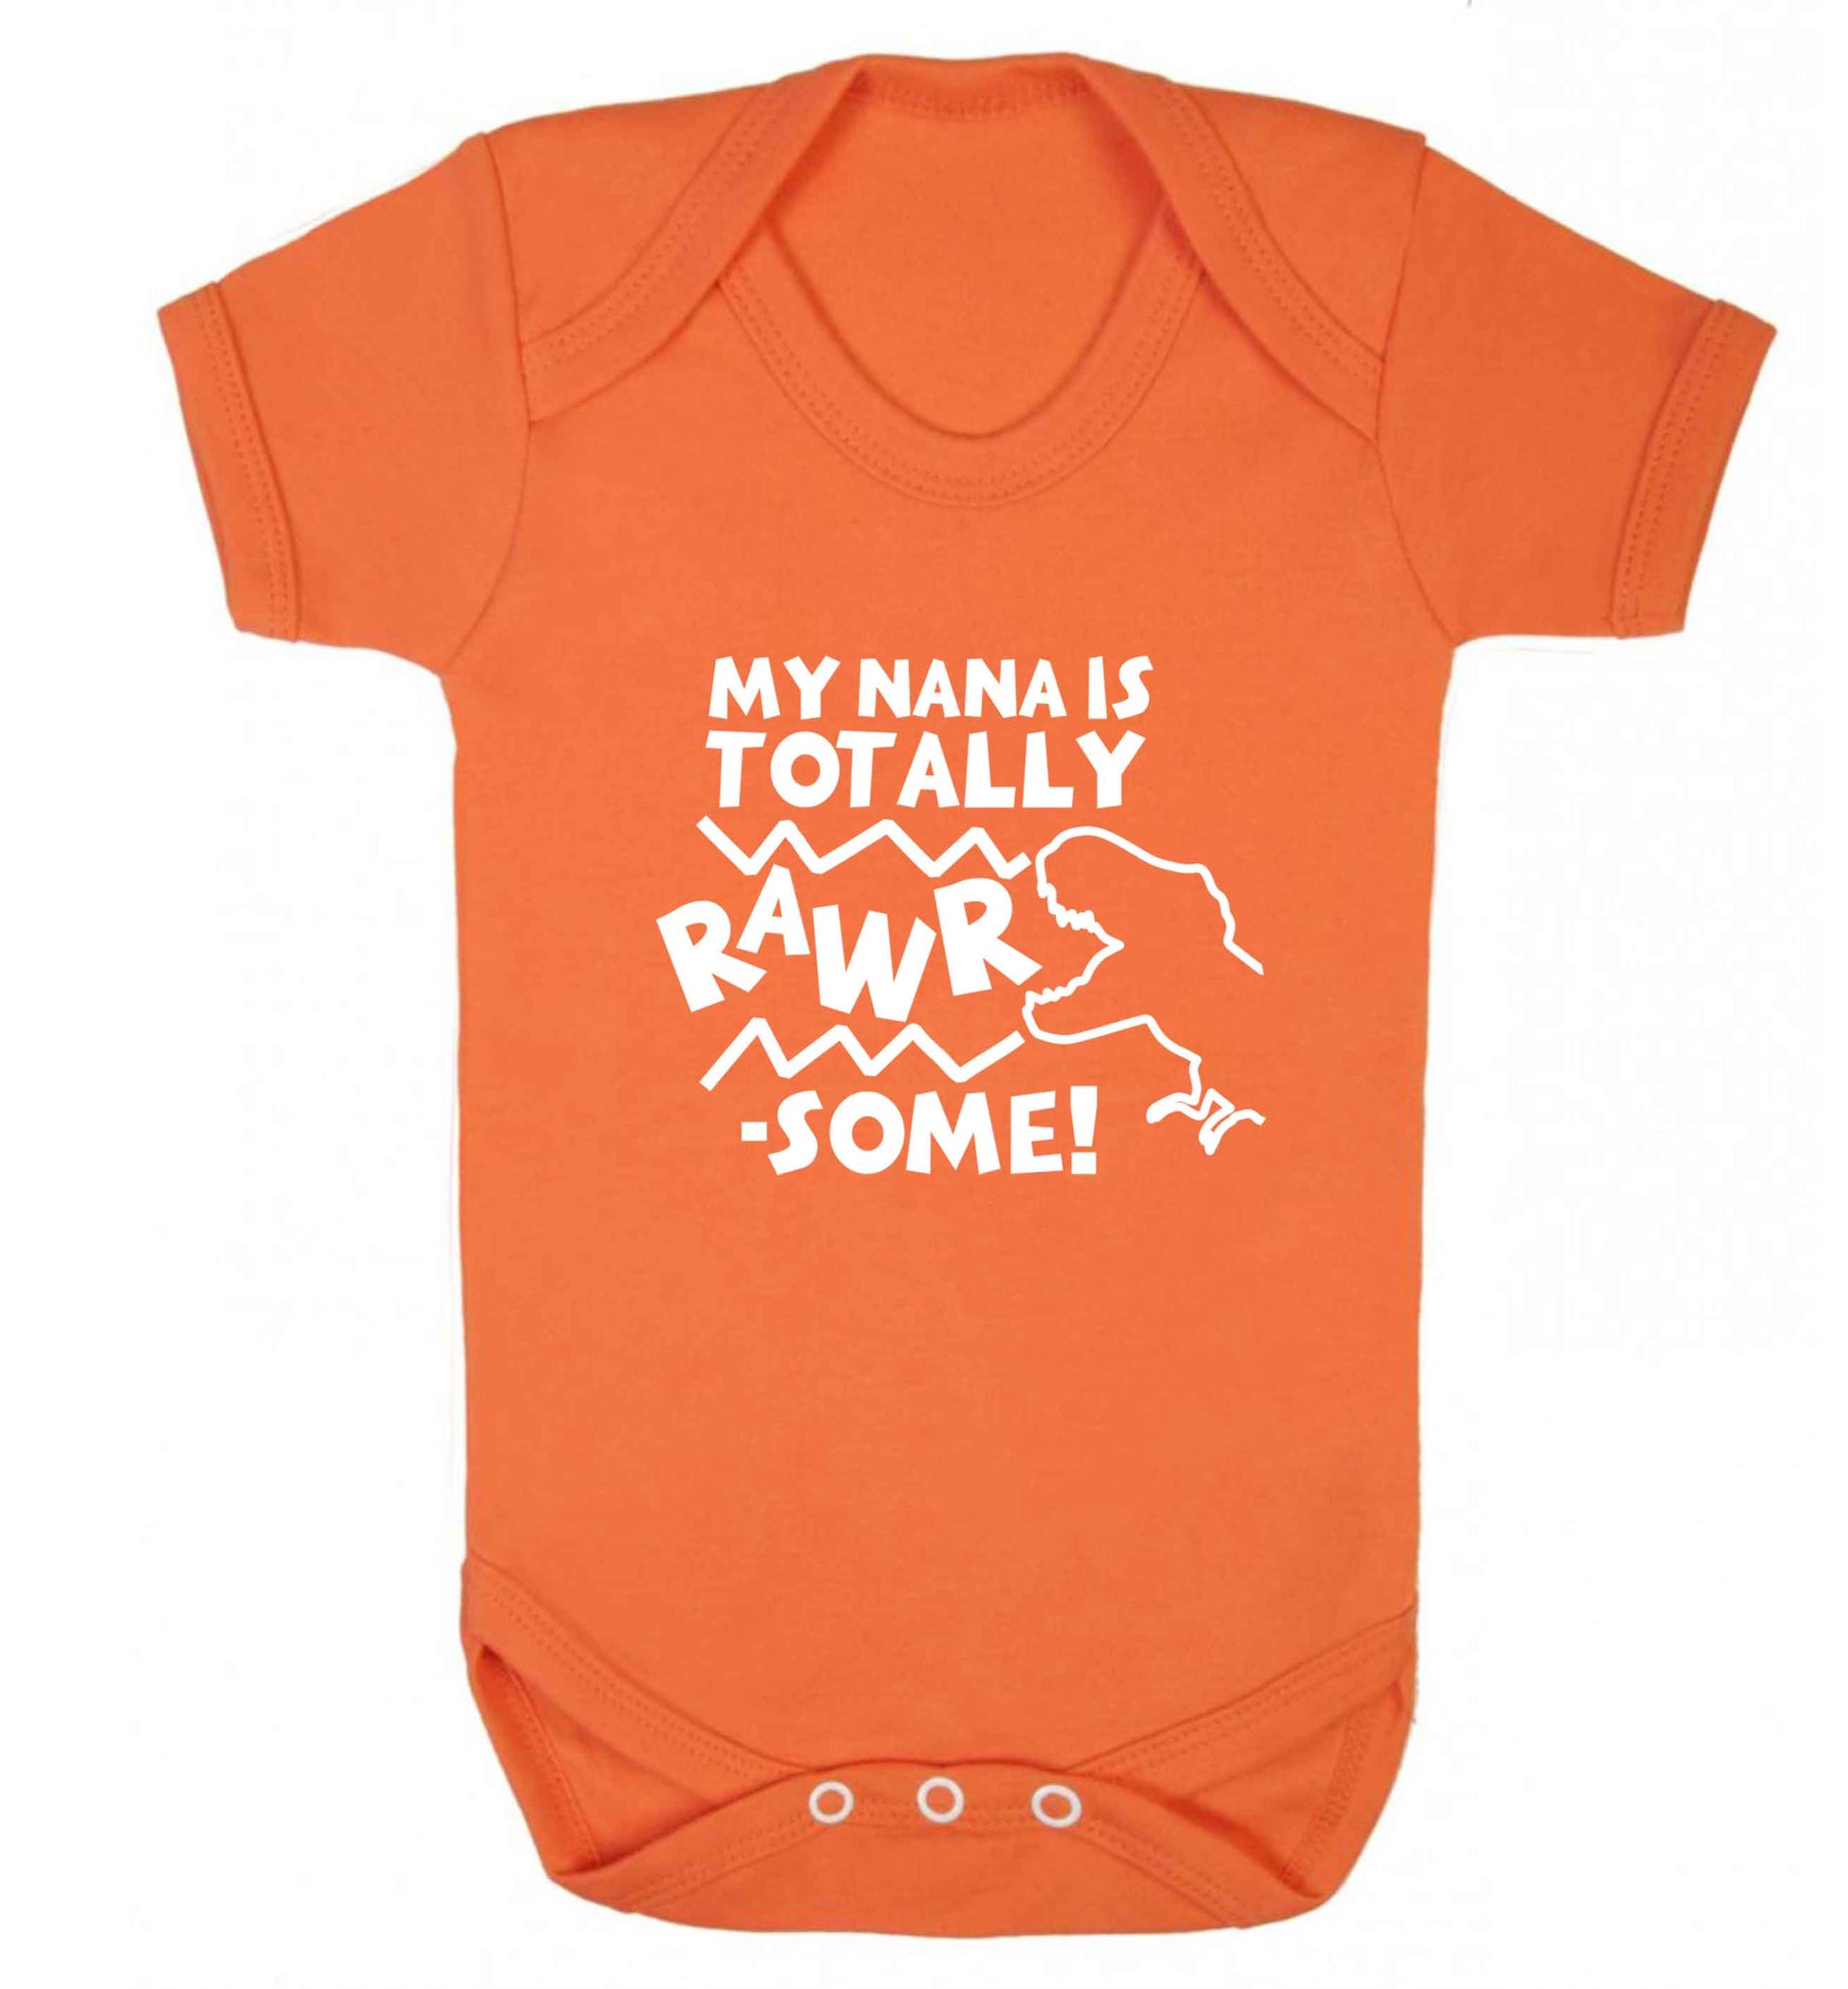 My nana is totally rawrsome baby vest orange 18-24 months